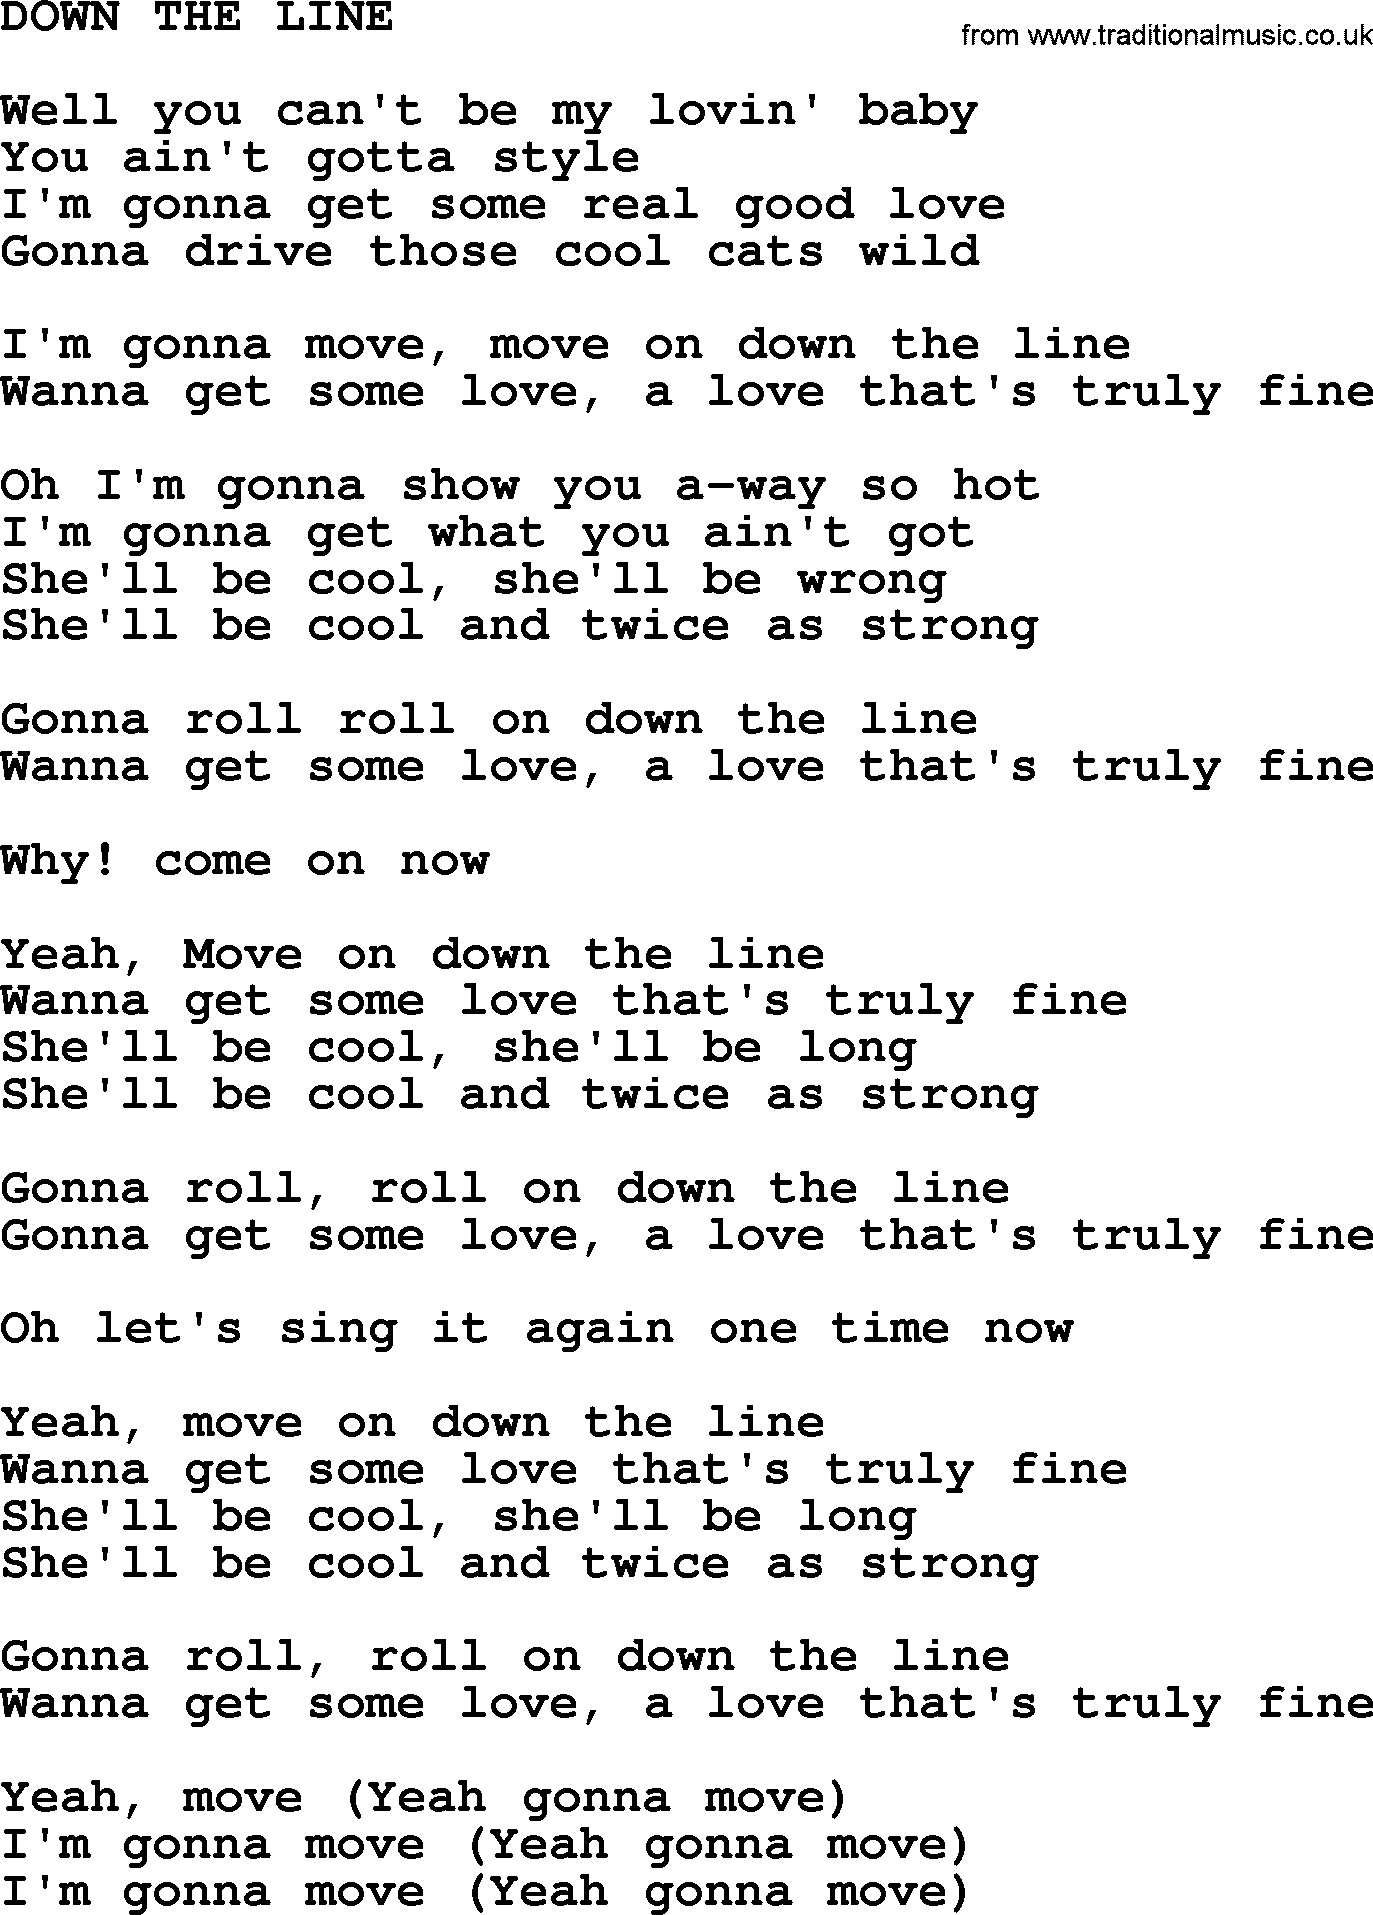 Johnny Cash song Down The Line.txt lyrics